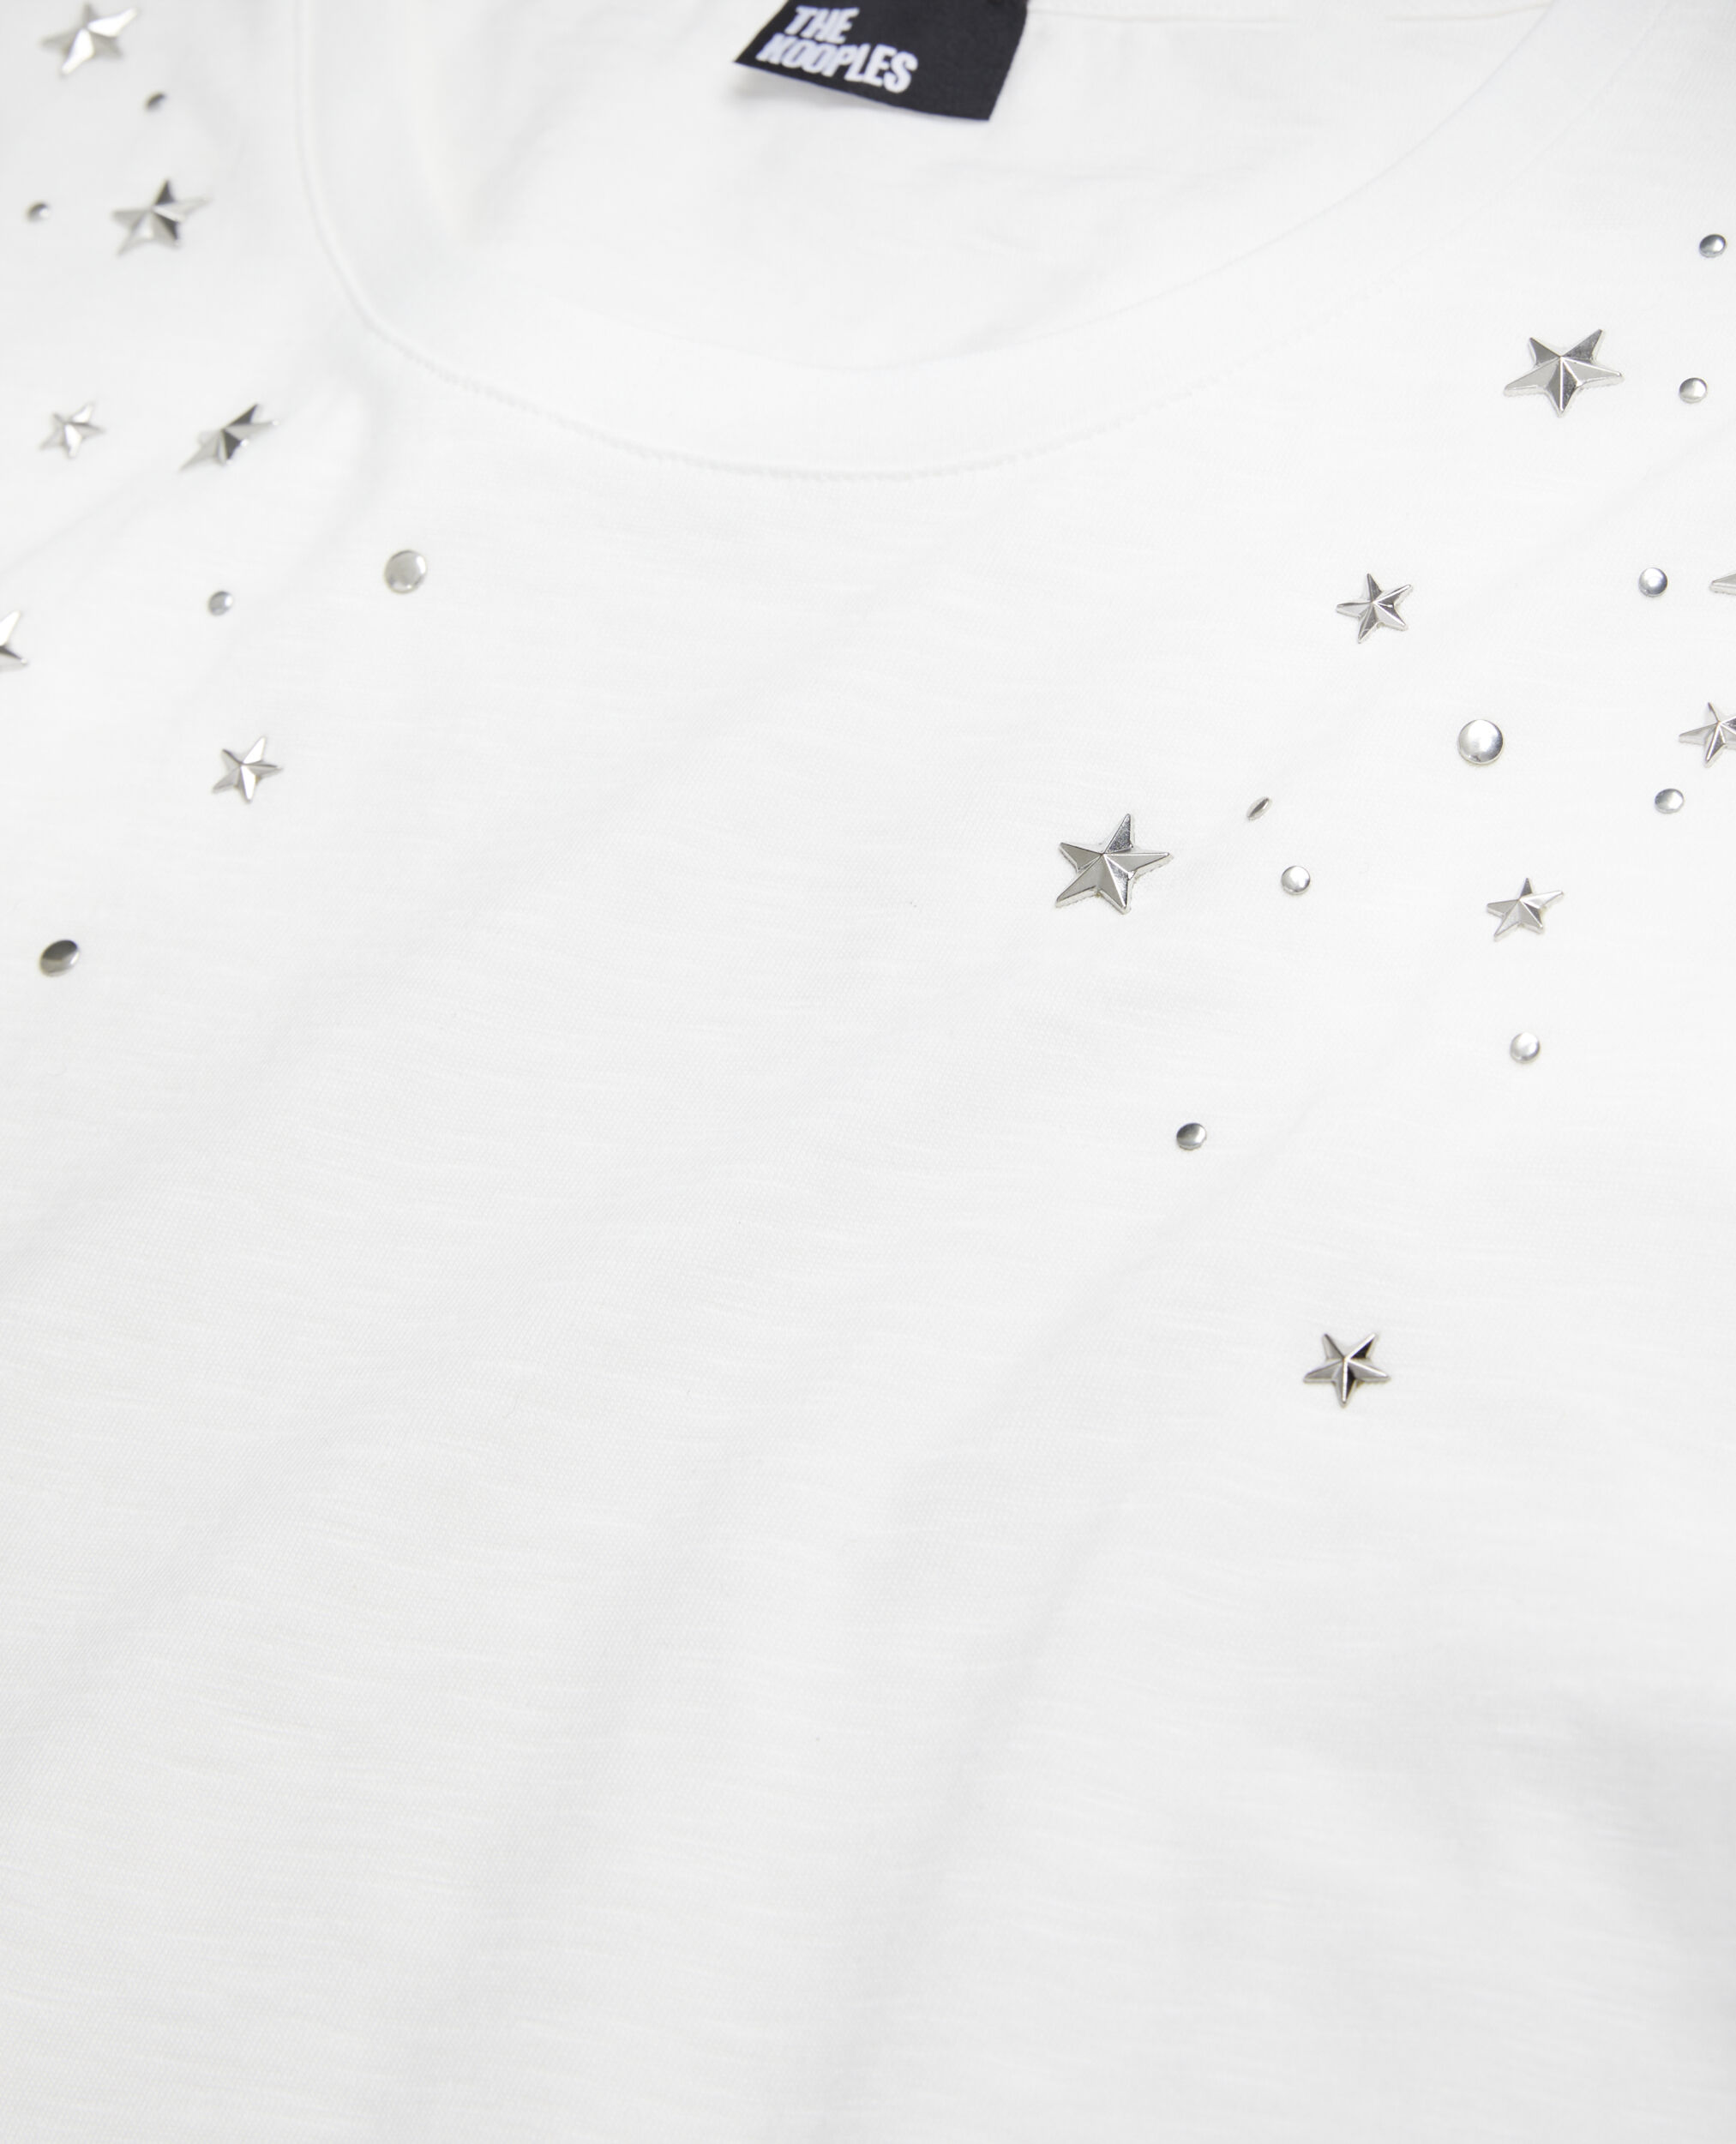 T-shirt Femme blanc avec étoiles, WHITE, hi-res image number null